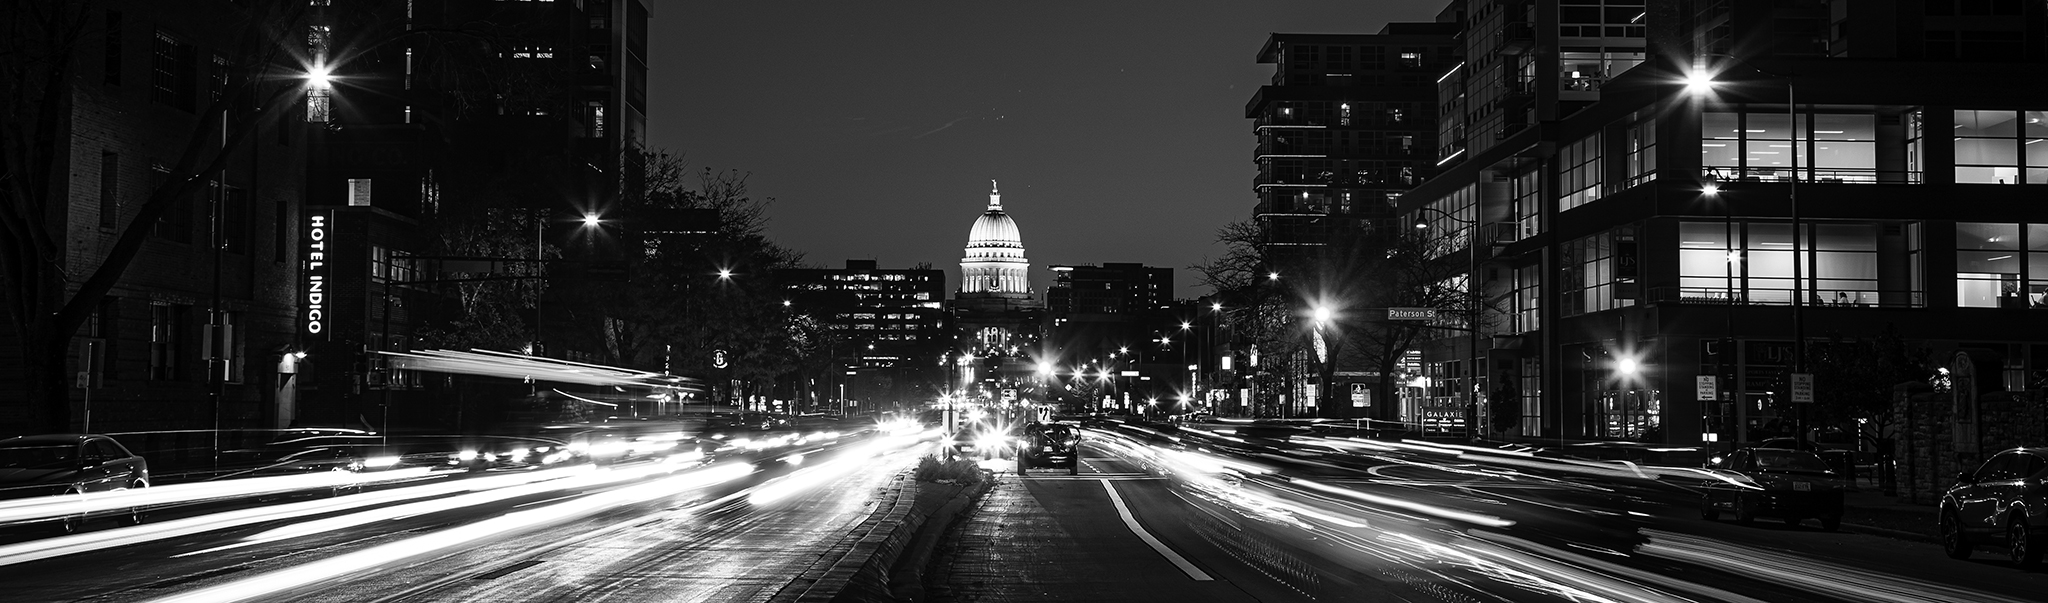 East Washington Avenue at night